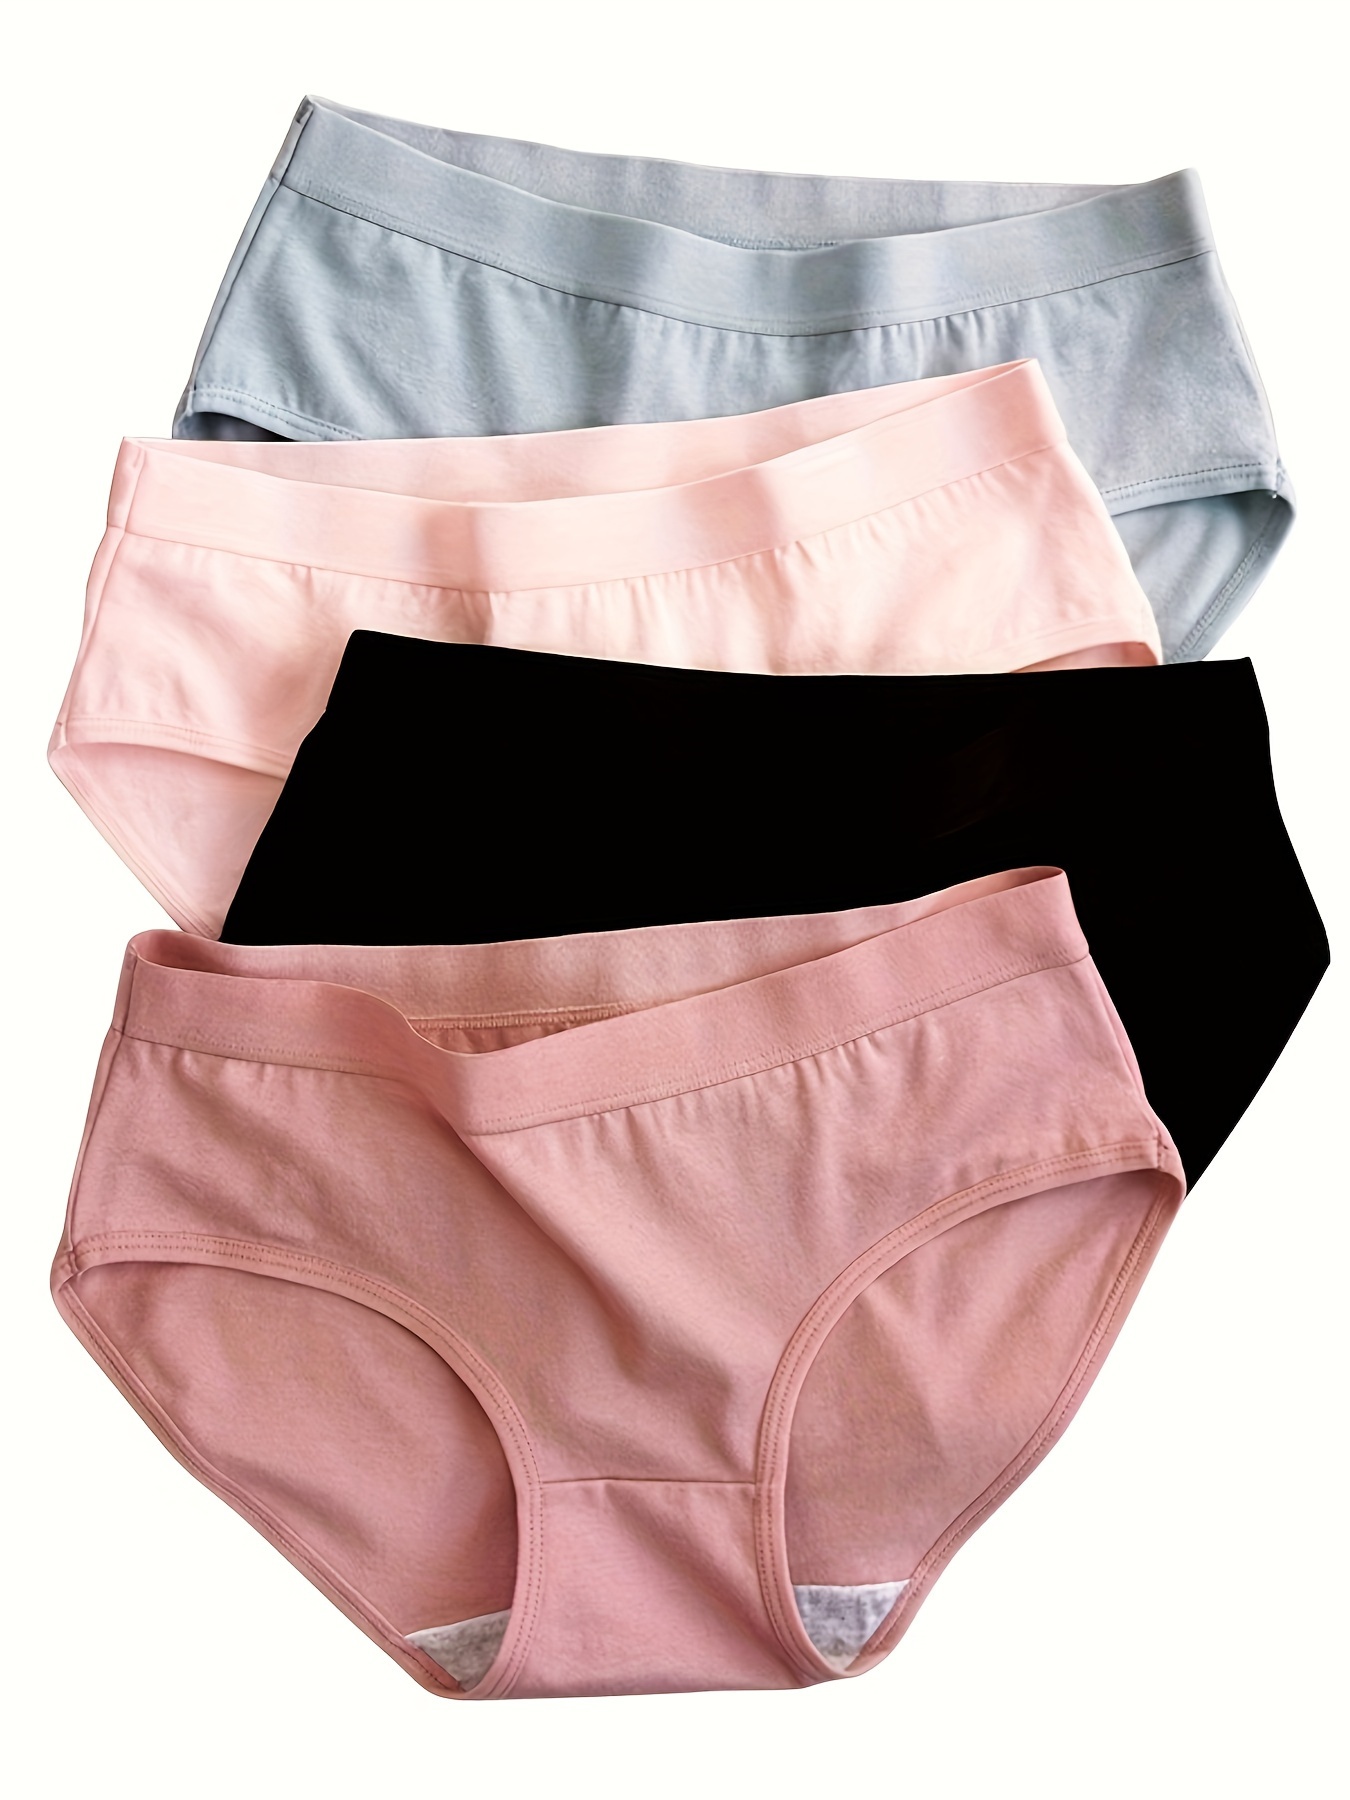 Aayomet Women's Brief Underwear Women's Border Leopard Print Four Layer  Underwear Women's Pants,Blue M